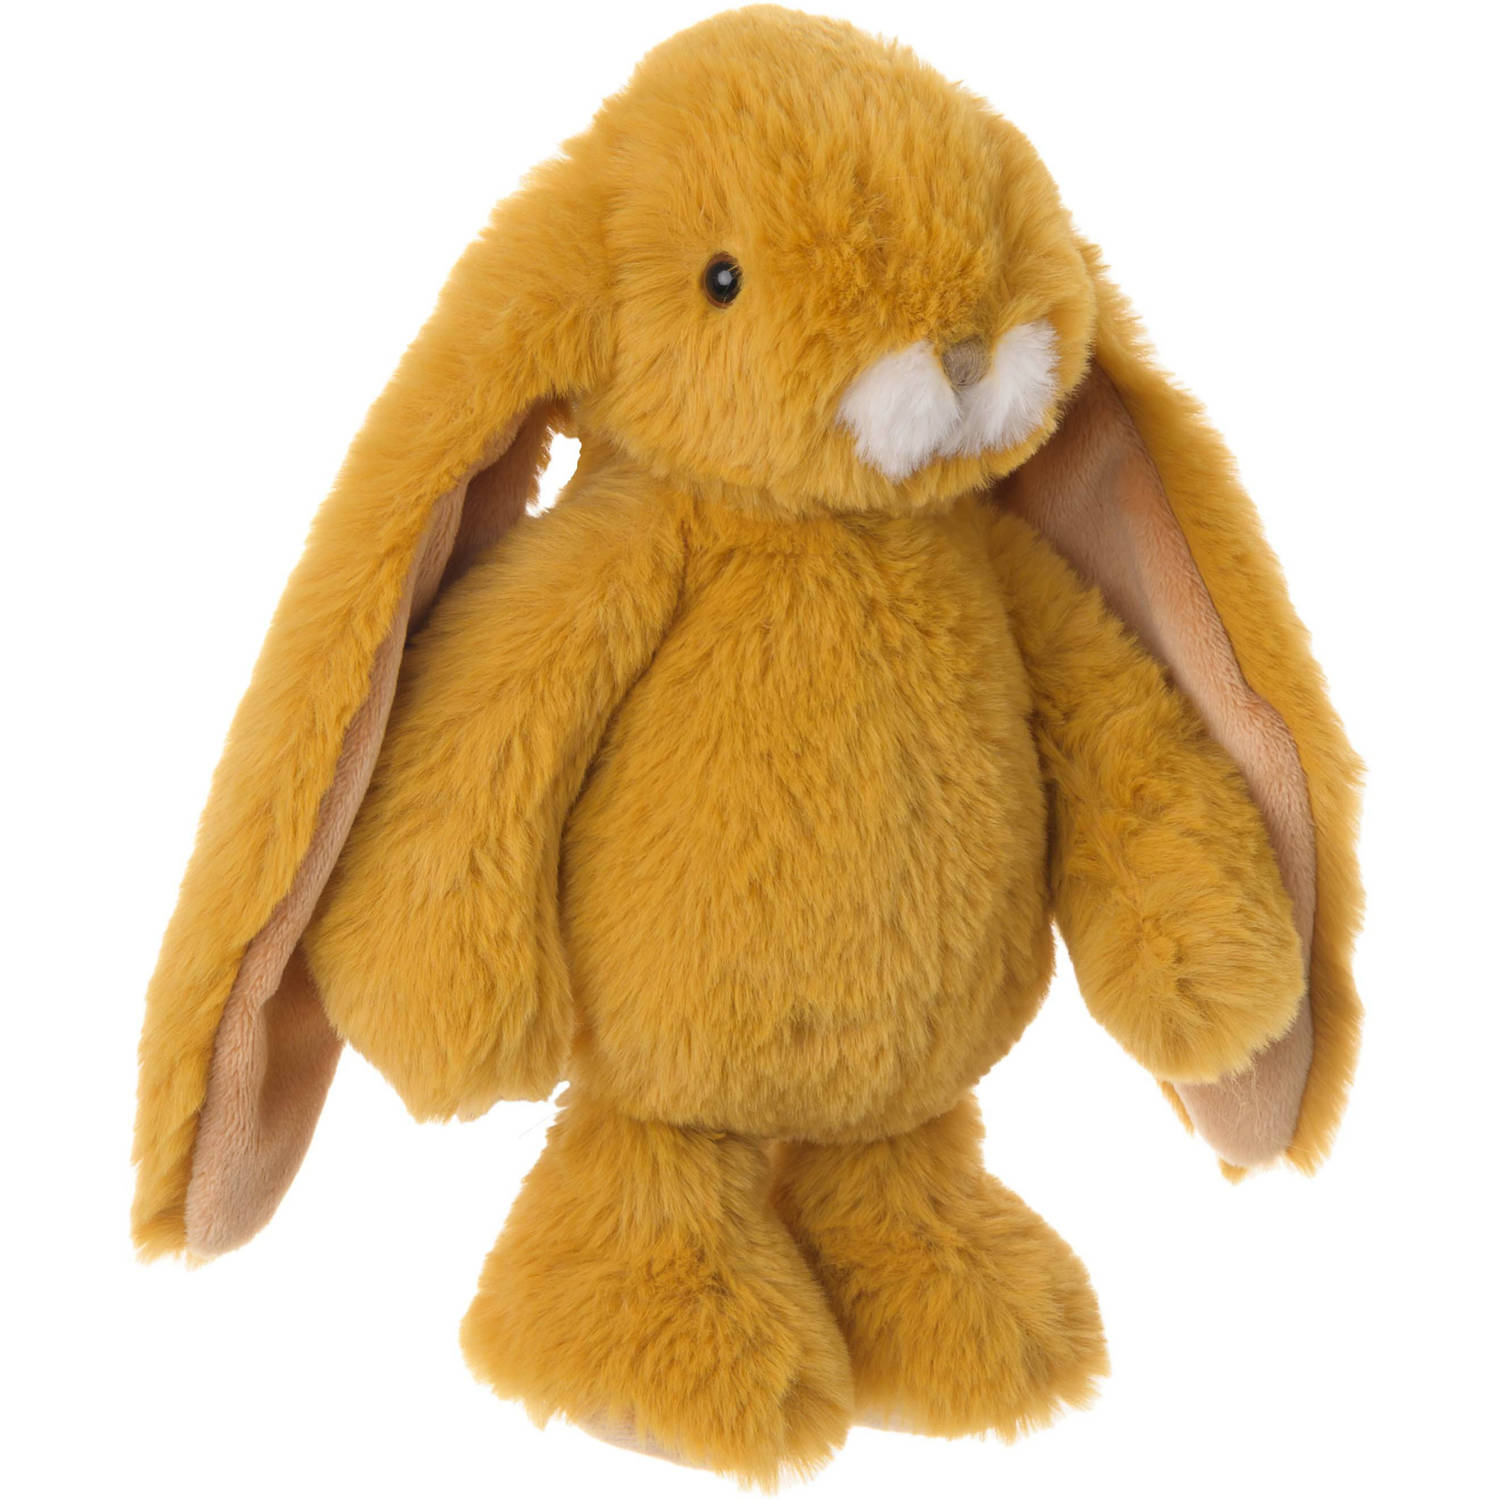 Bukowski pluche konijn knuffeldier - dark okergeel - staand - 22 cm - Luxe kwaliteit knuffels